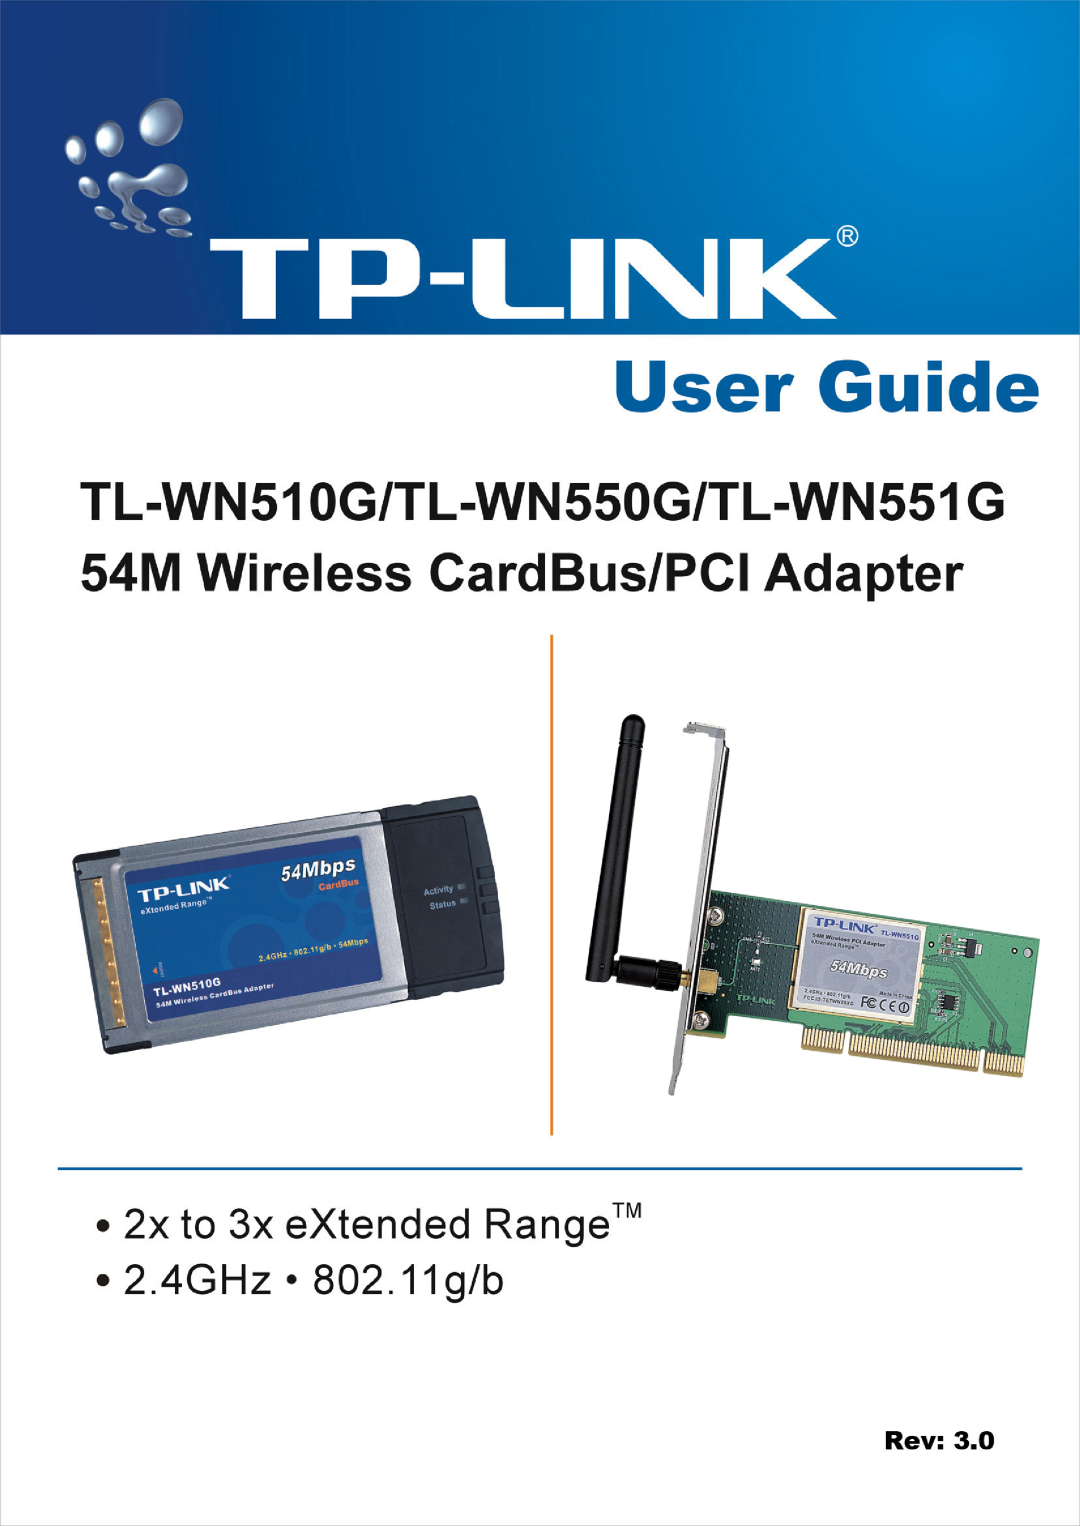 TP-Link TL-WN551G, TL-WN510G, TL-WN550G manual 